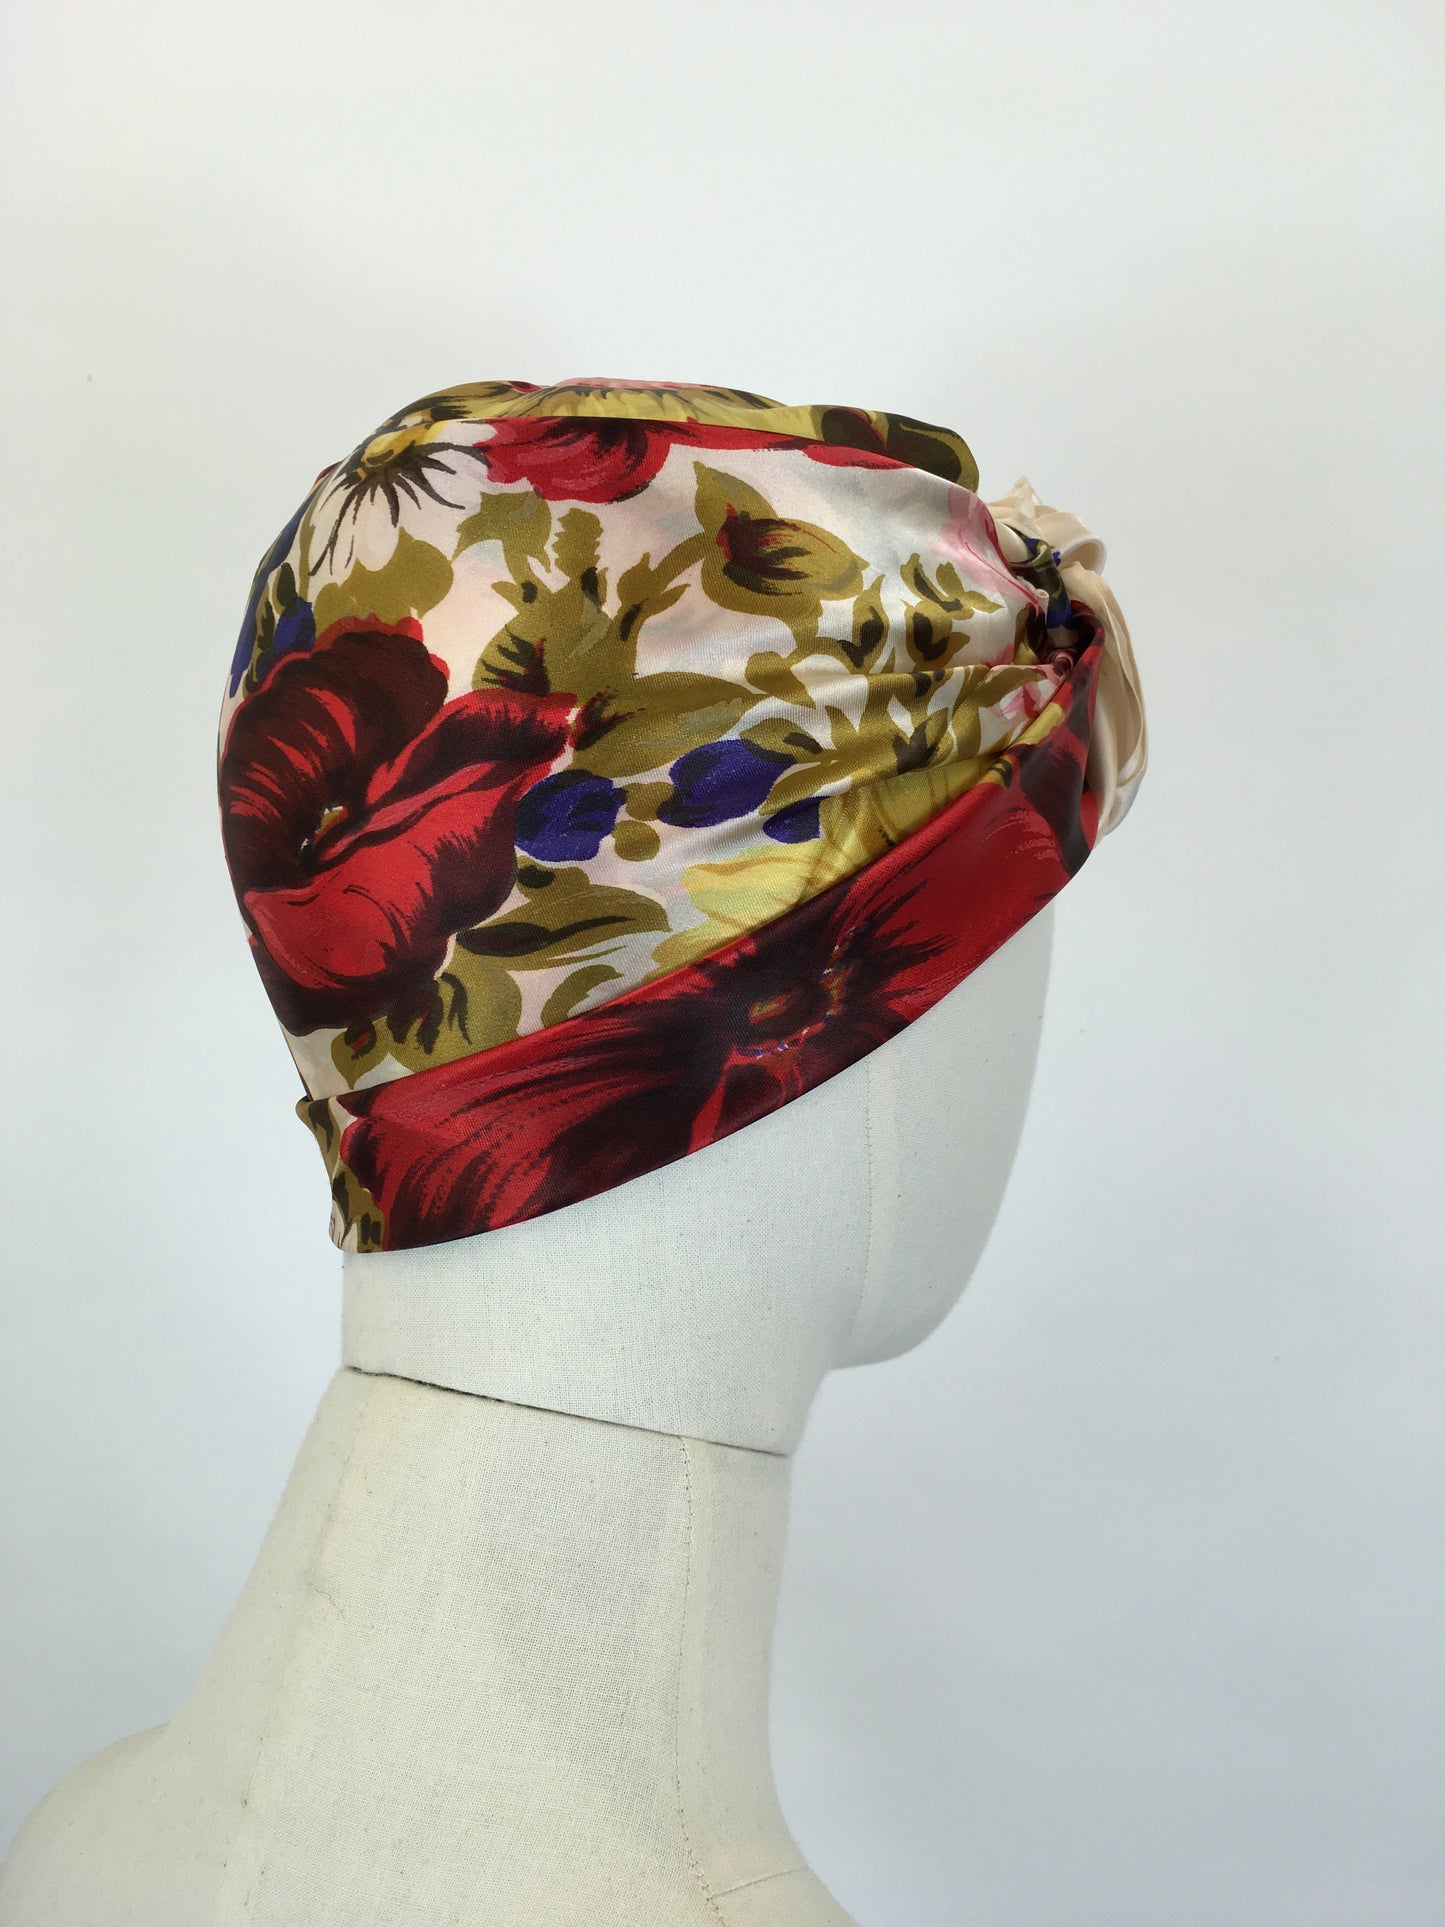 Original 1950’s Silk Floral Scarf - In A Summertime Bright Colour Palette